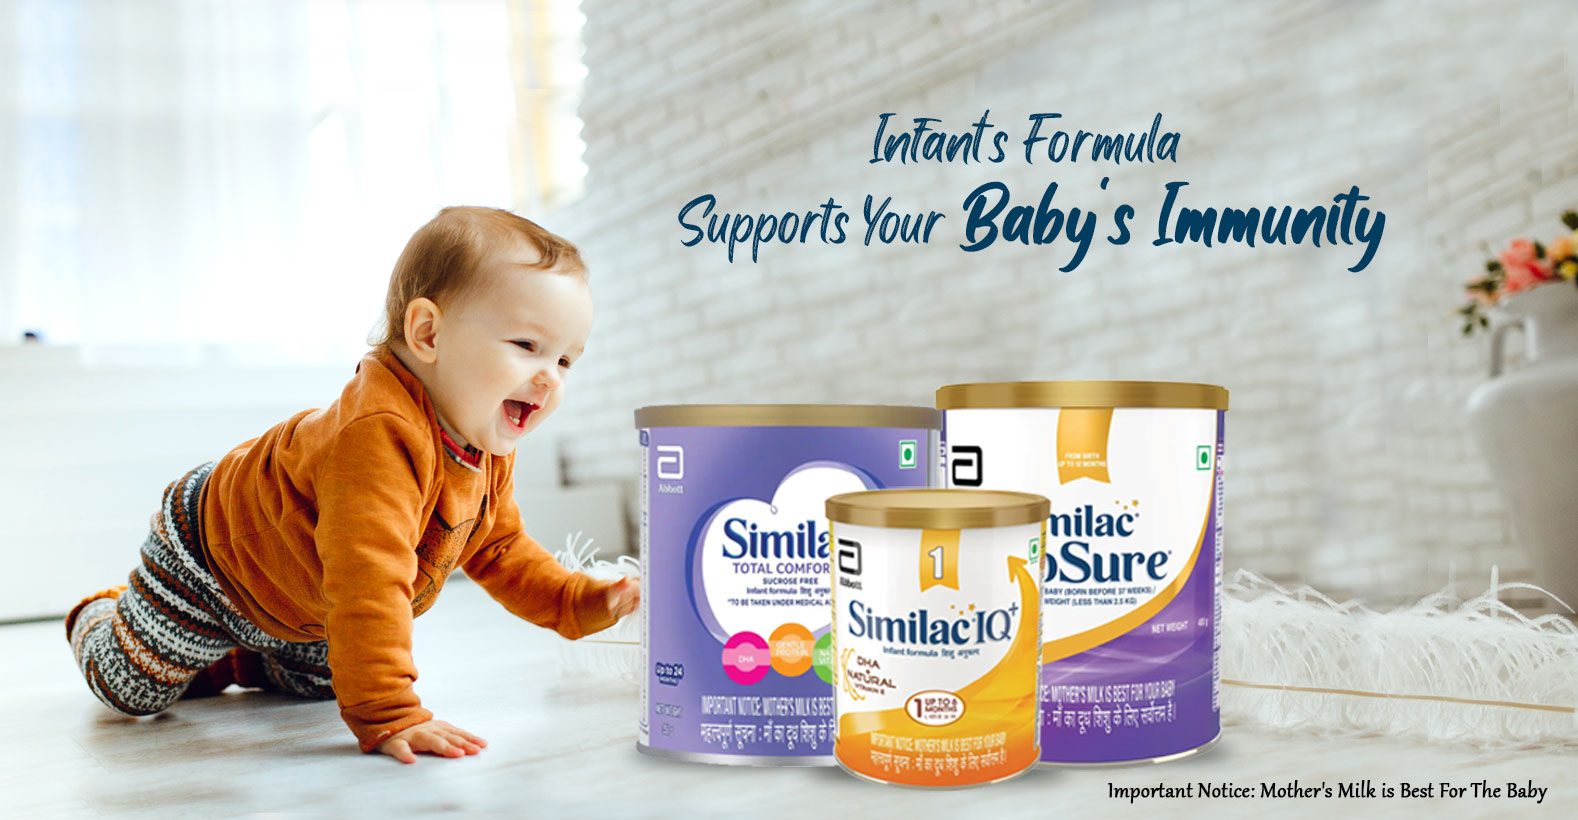 Similac- Infant's Formula